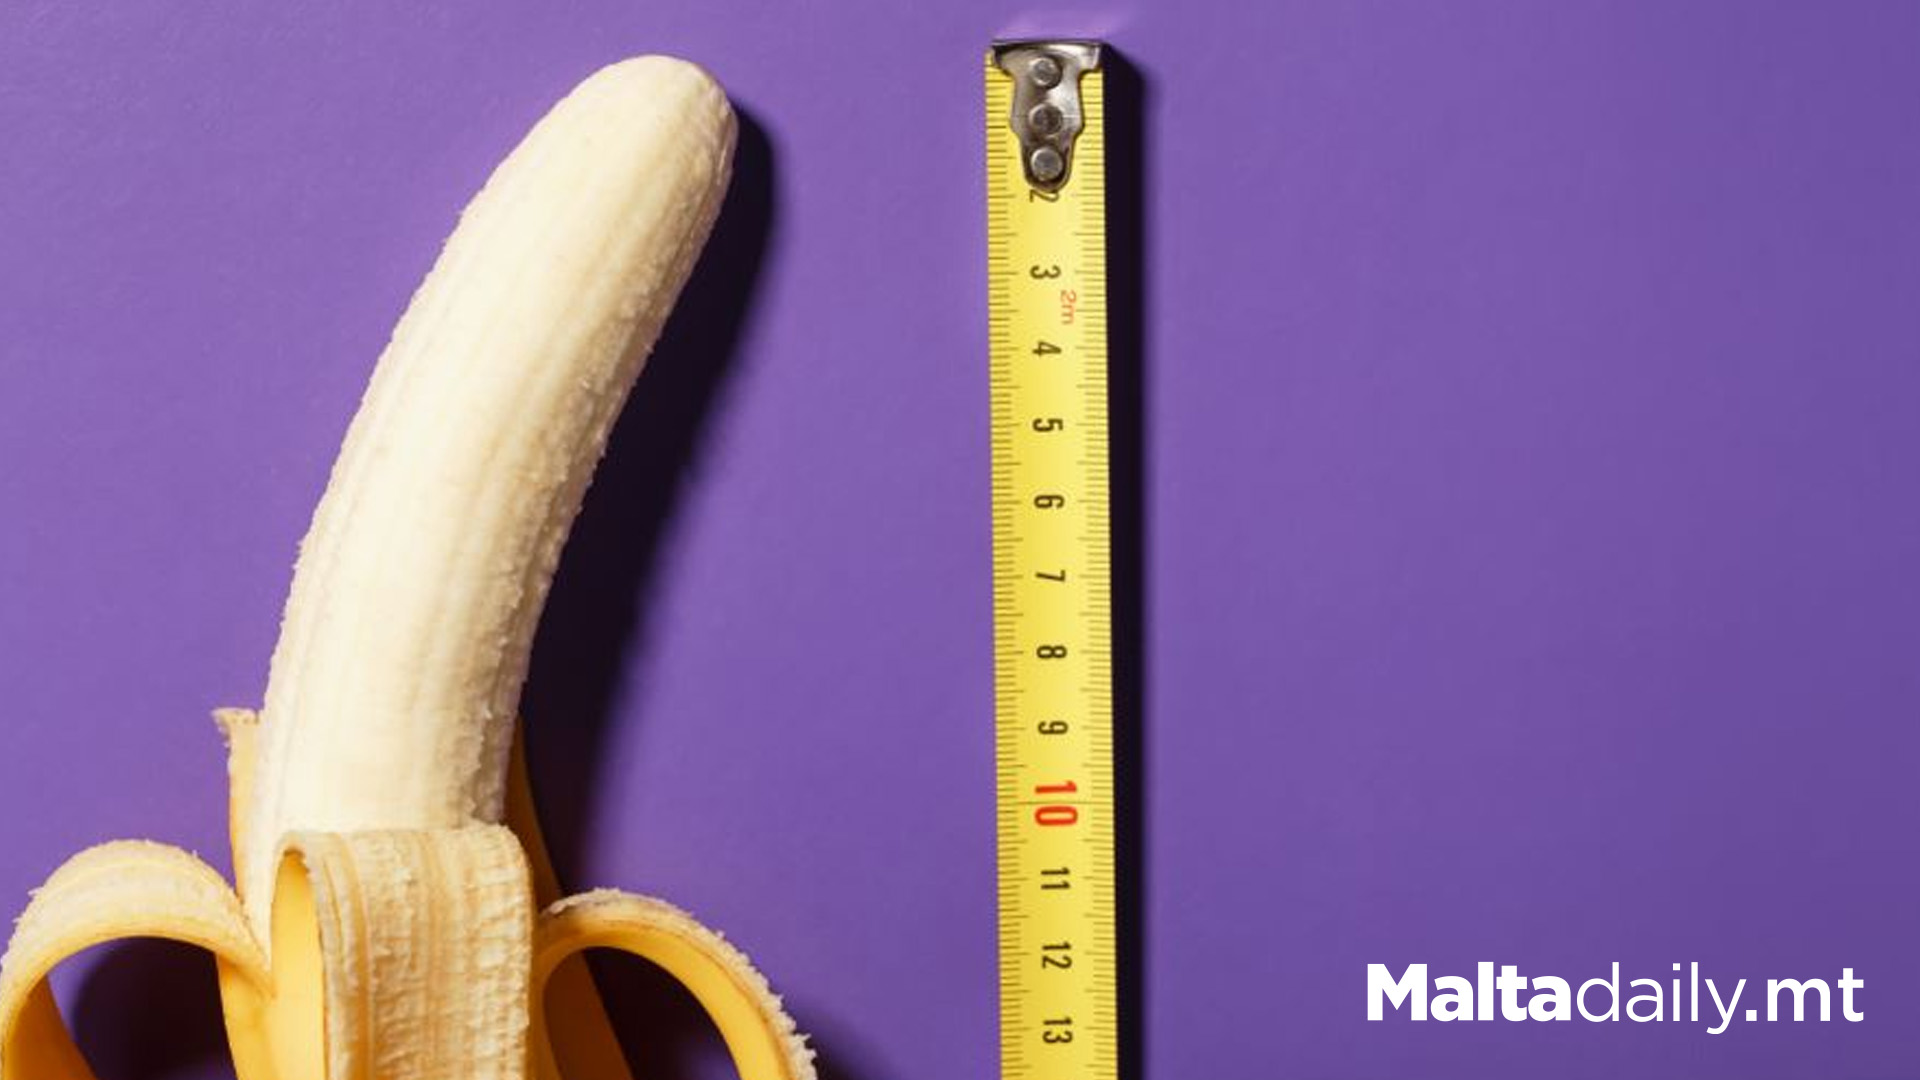 Average Penis Size Revealed: Malta Doesn't Make The Cut Again